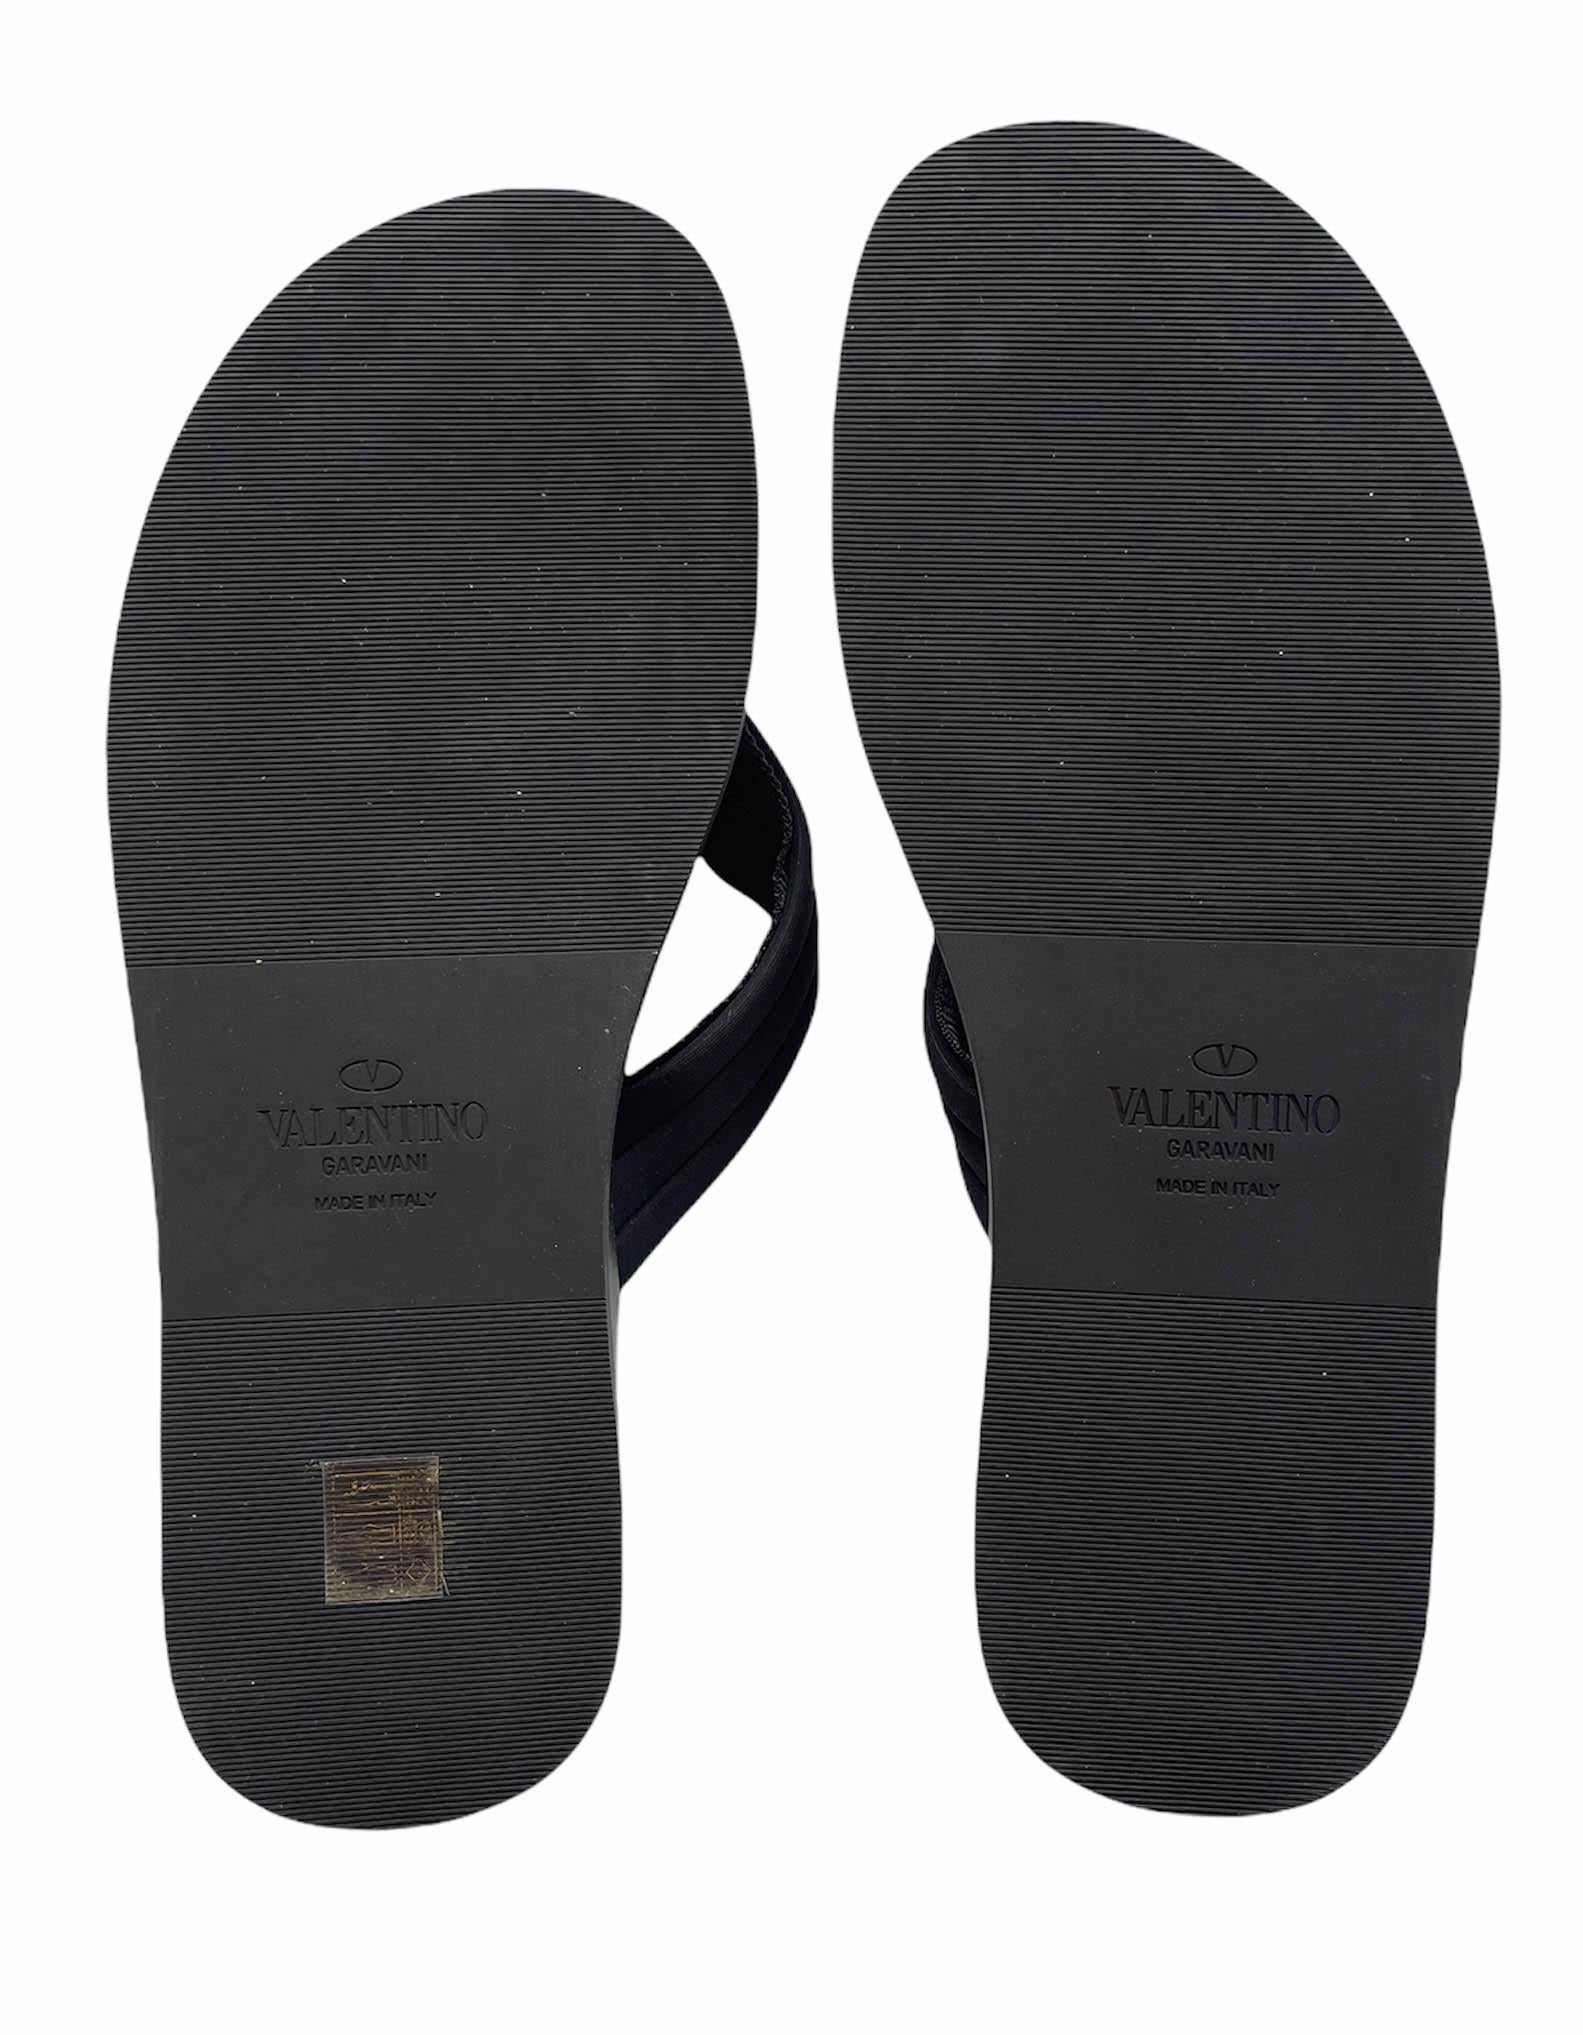 Valentino NEW Men's Black/White VLTN Flip Flop Sandals sz 43 2